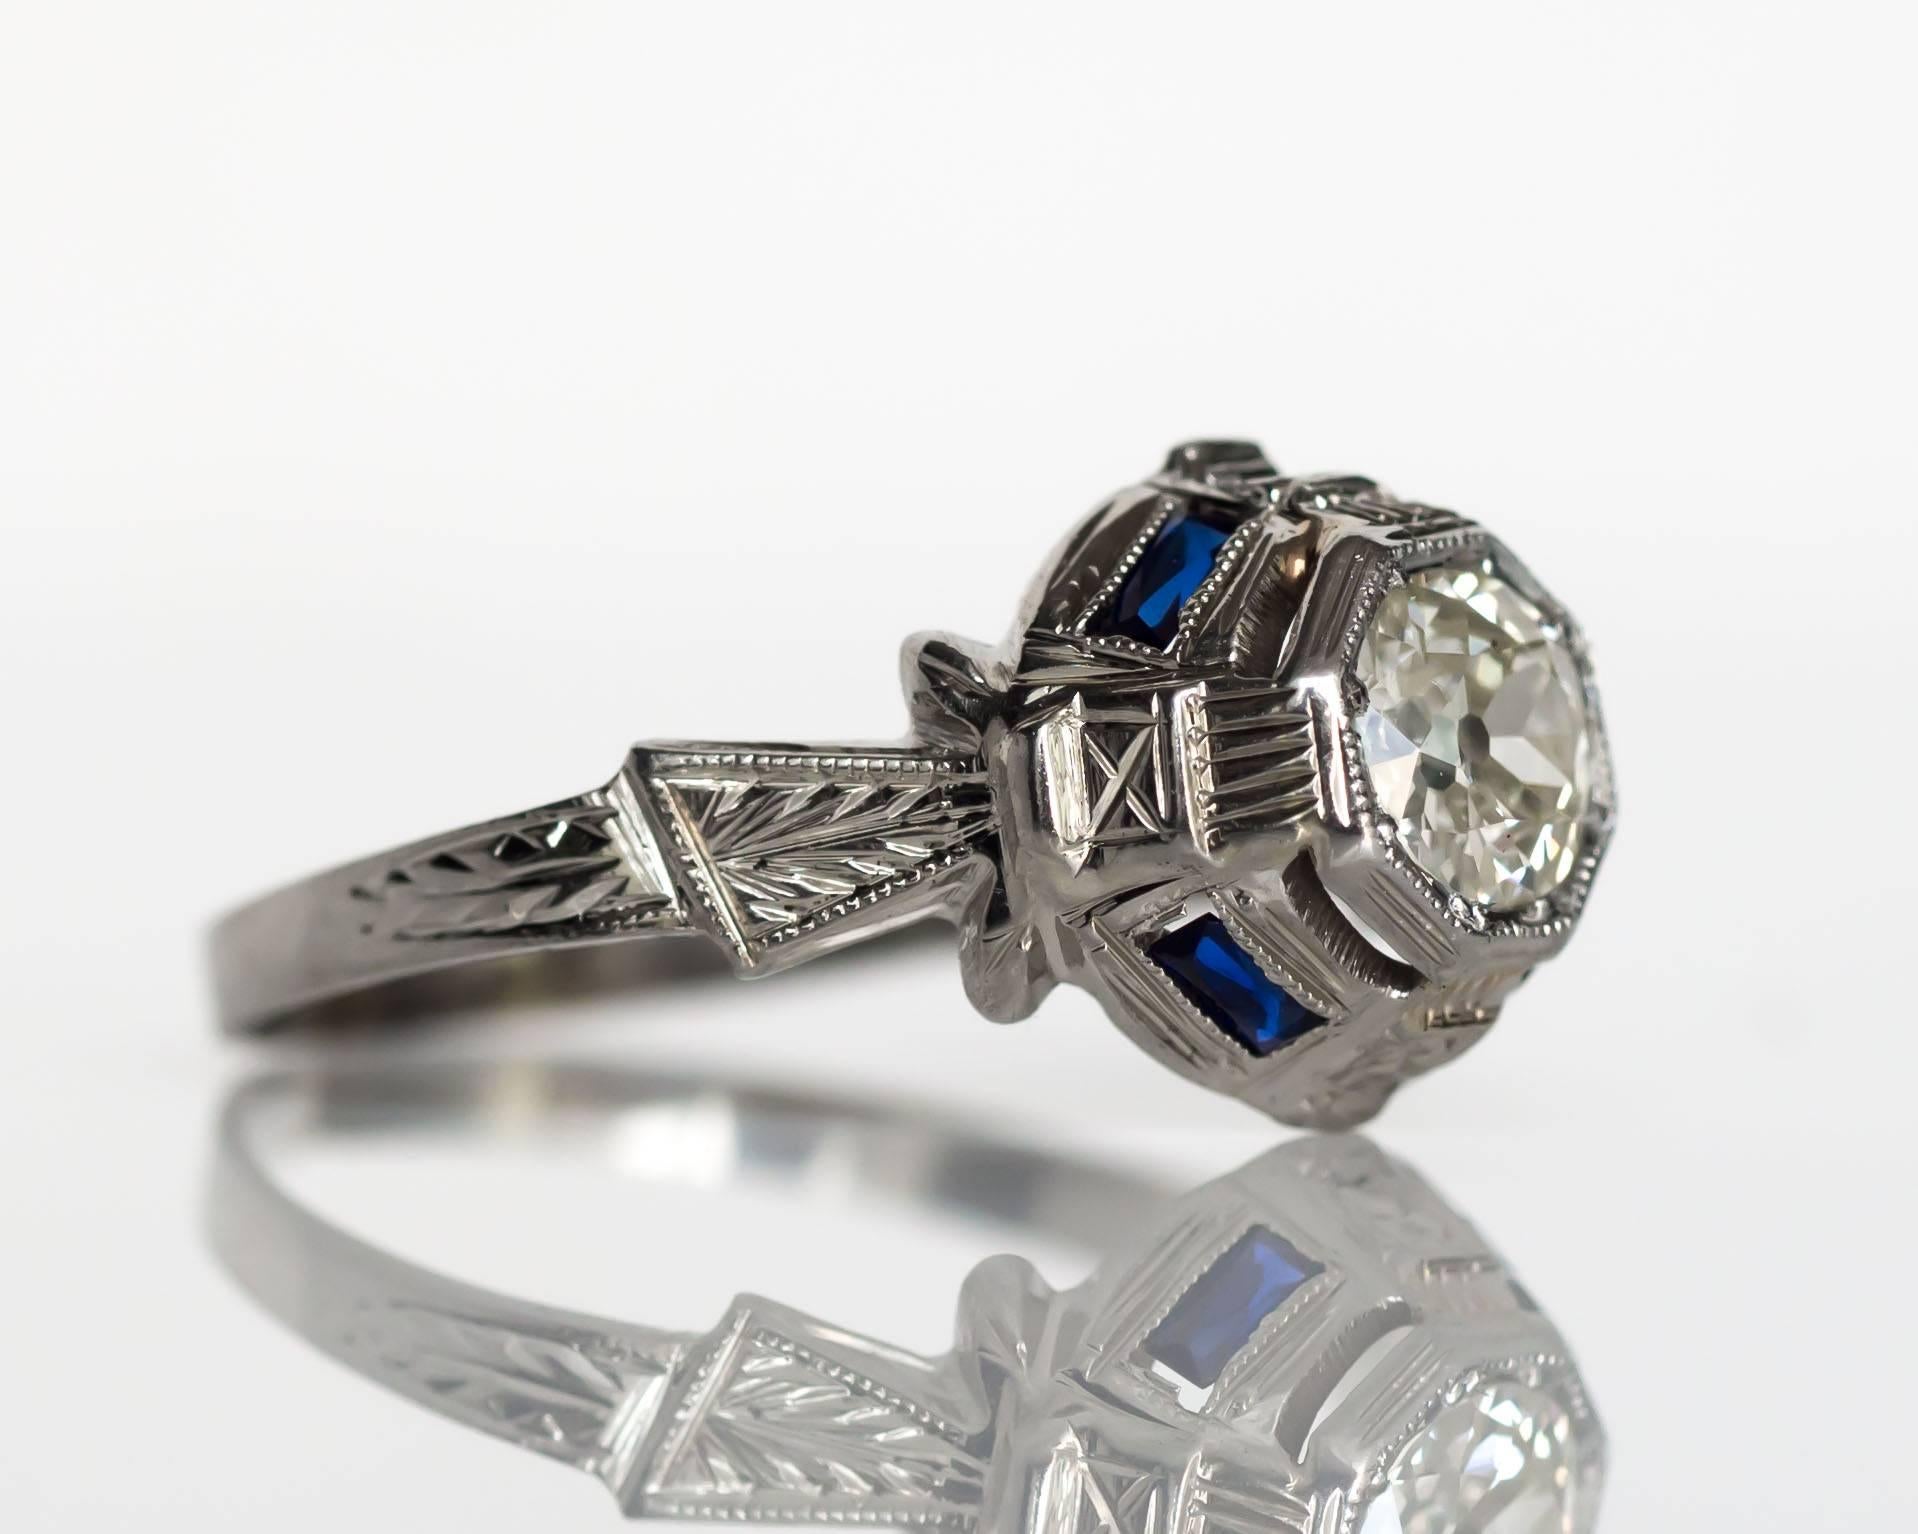 60 carat diamond ring